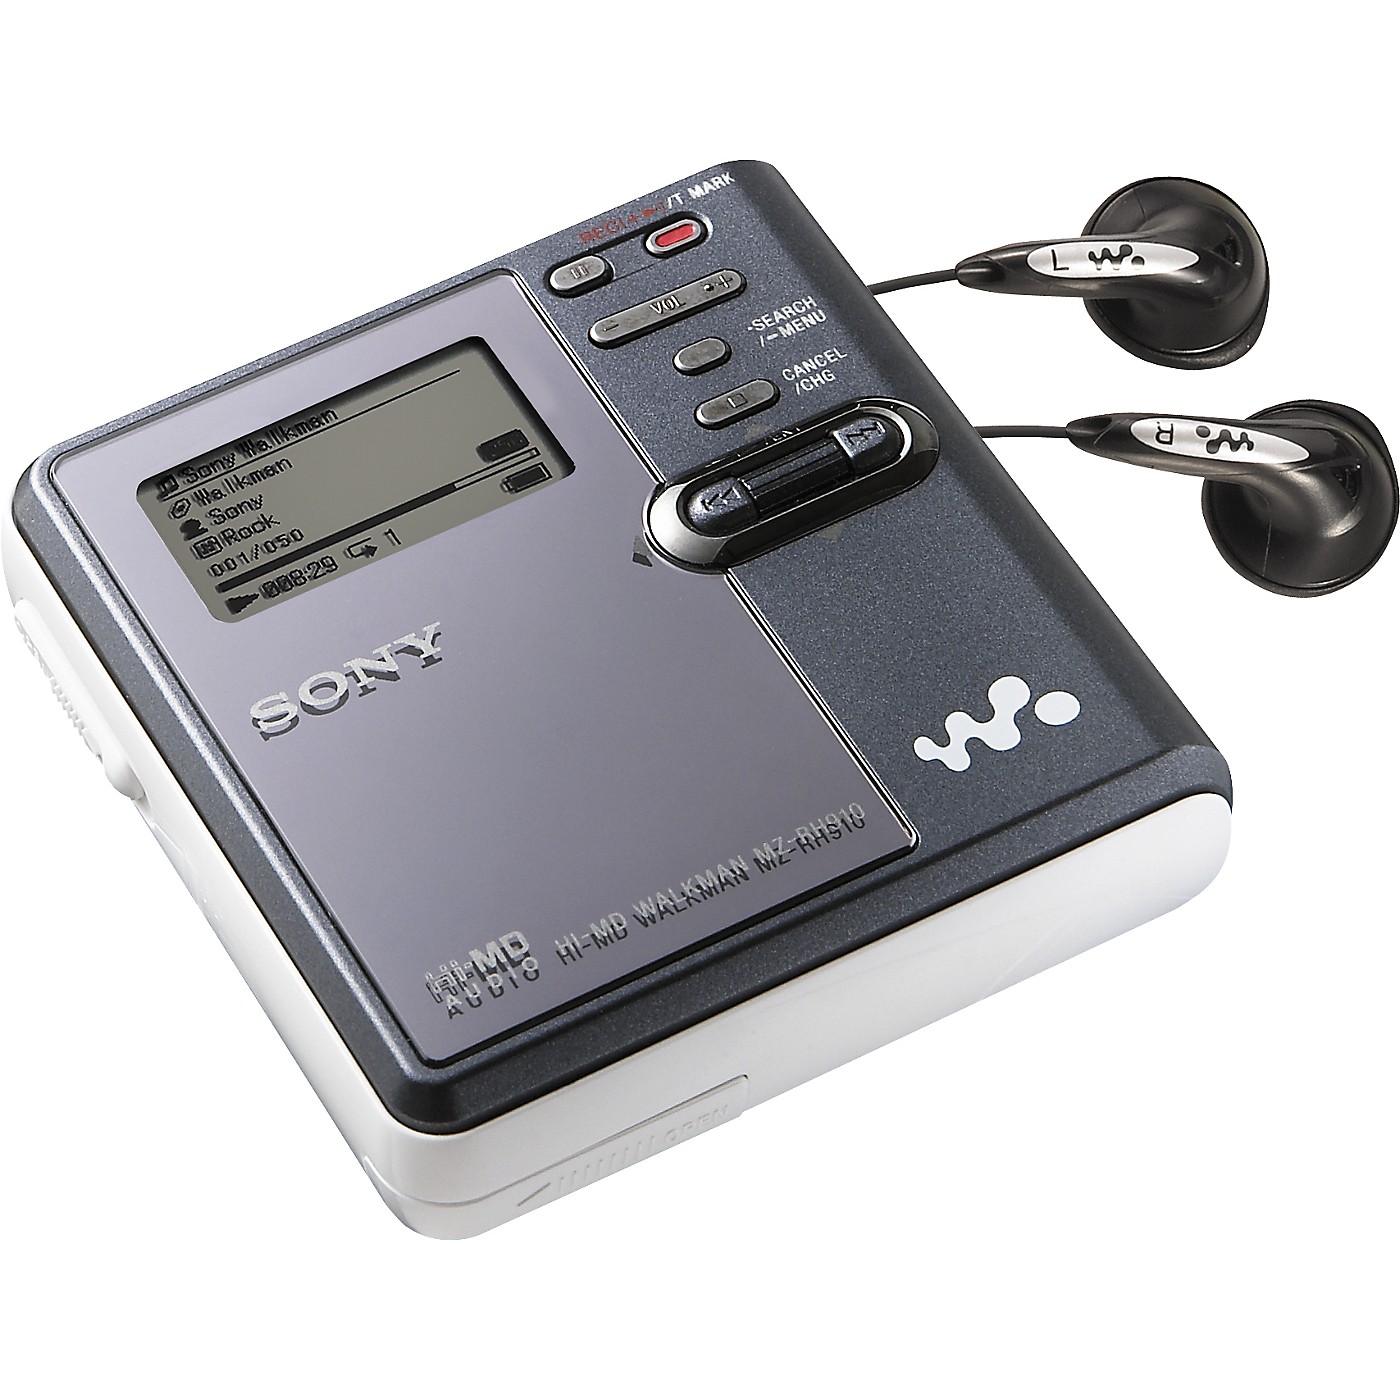 Sony MZ-RH910 Hi-MD Walkman Digital Music Player - Woodwind & Brasswind